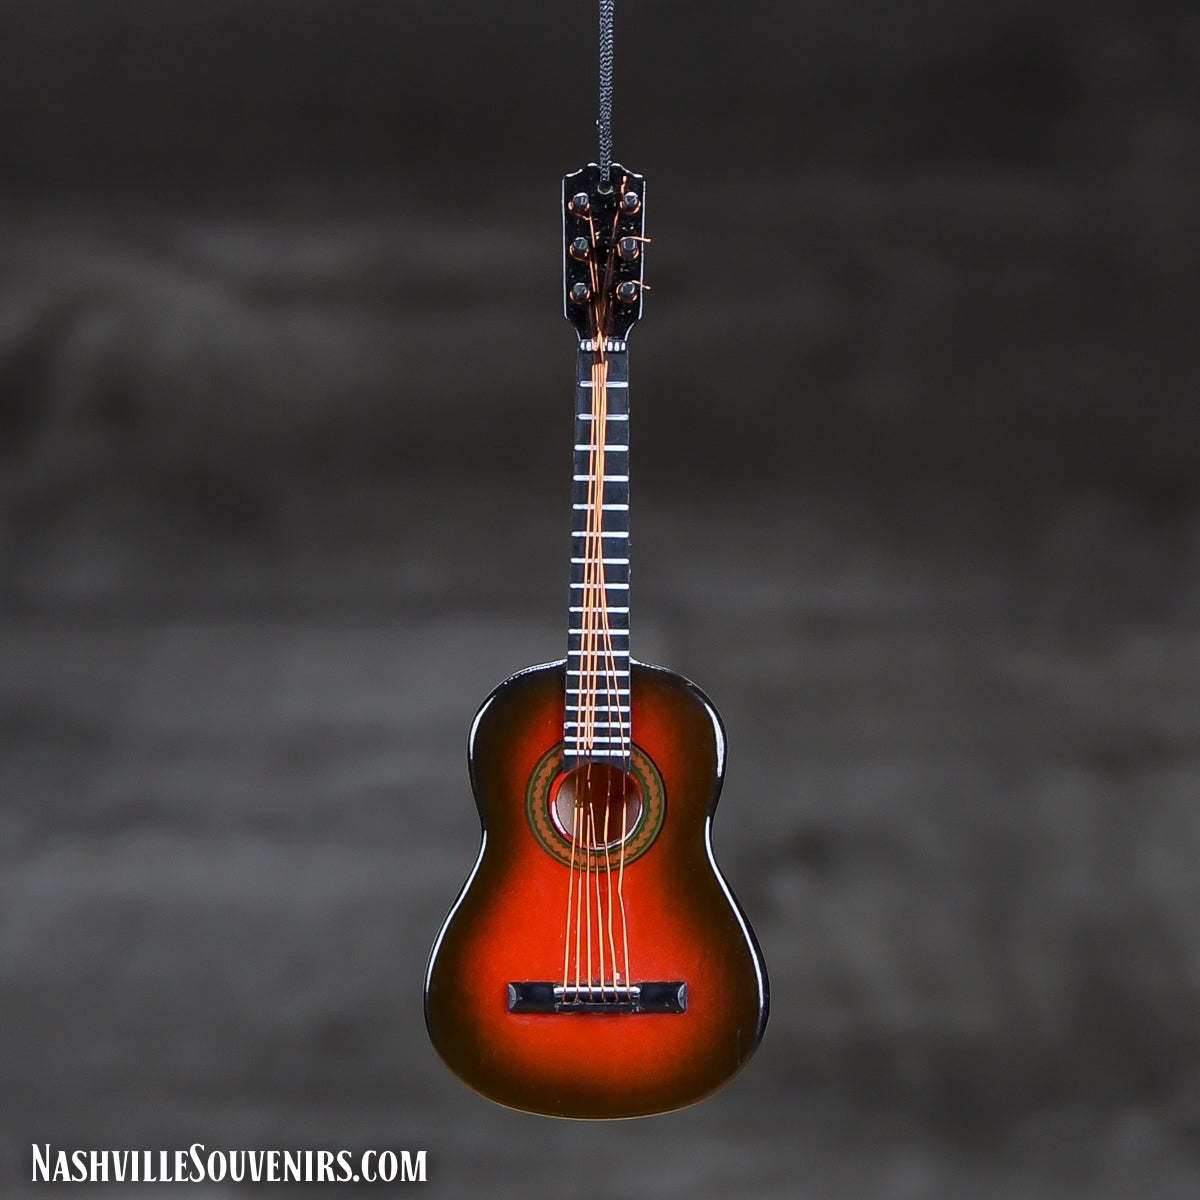 Replica Acoustic Guitar Ornament